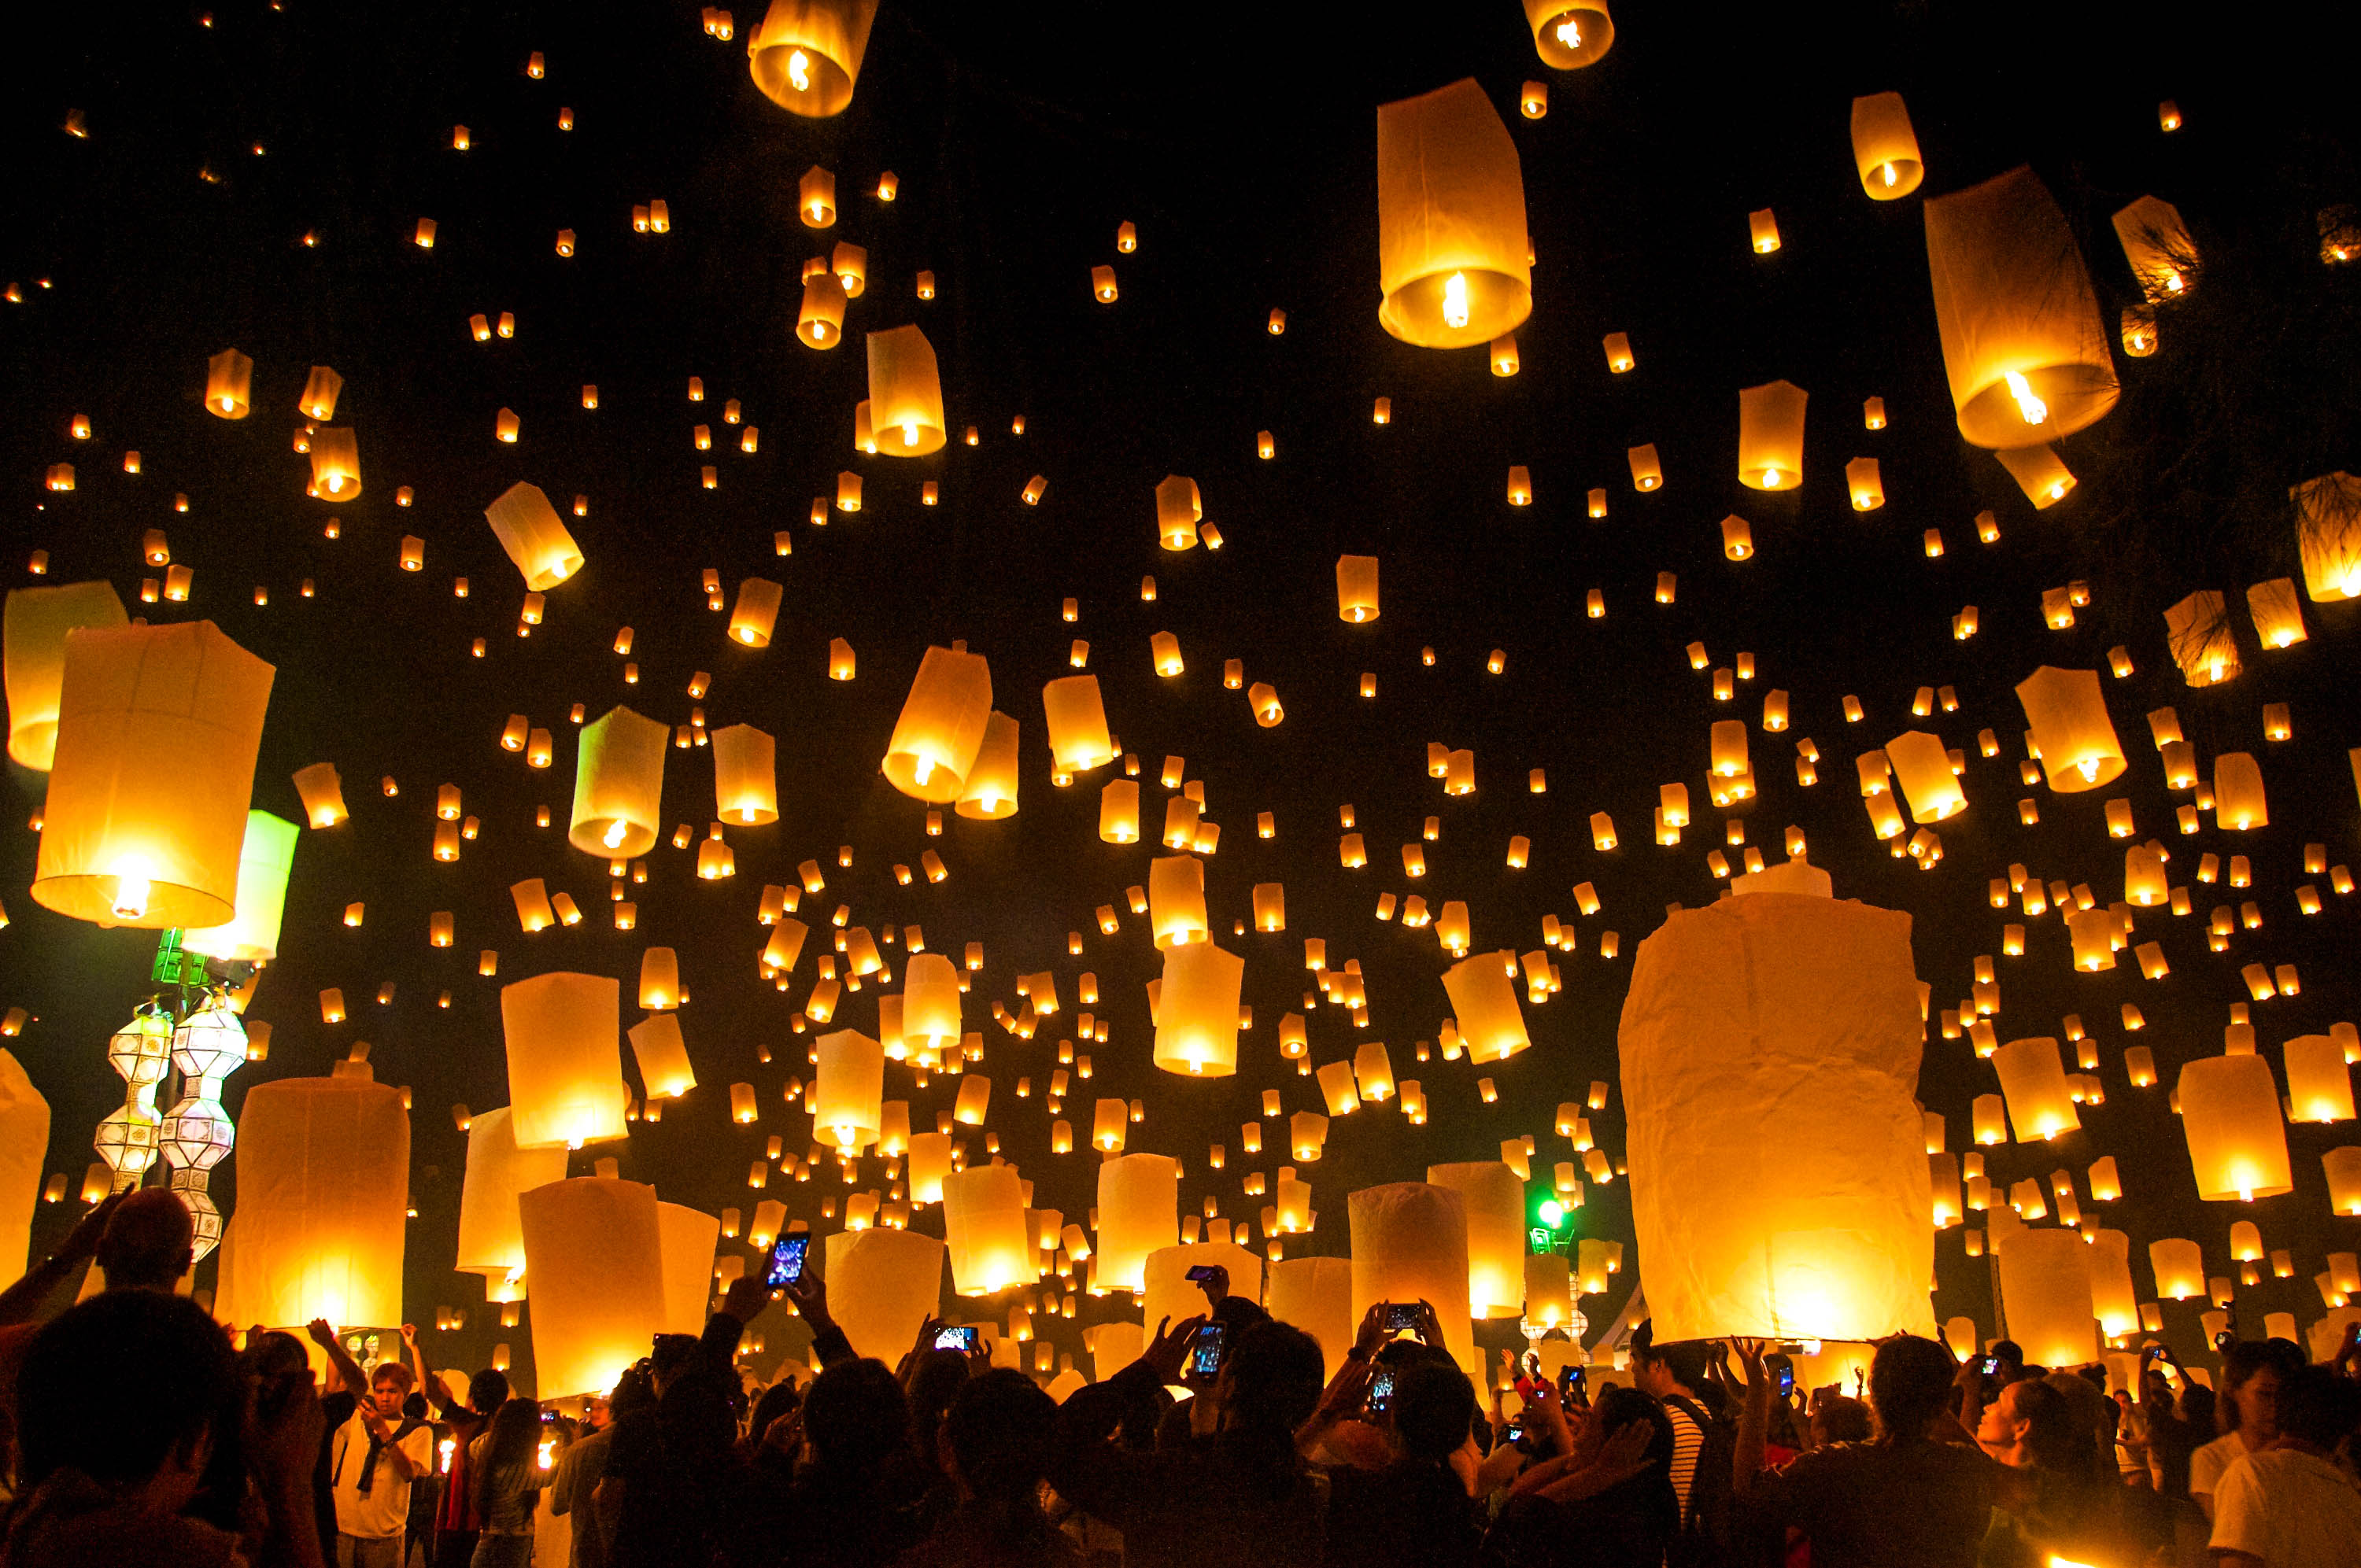 Lichterfest in Thailand, Loy Krathong, Chiang Mai